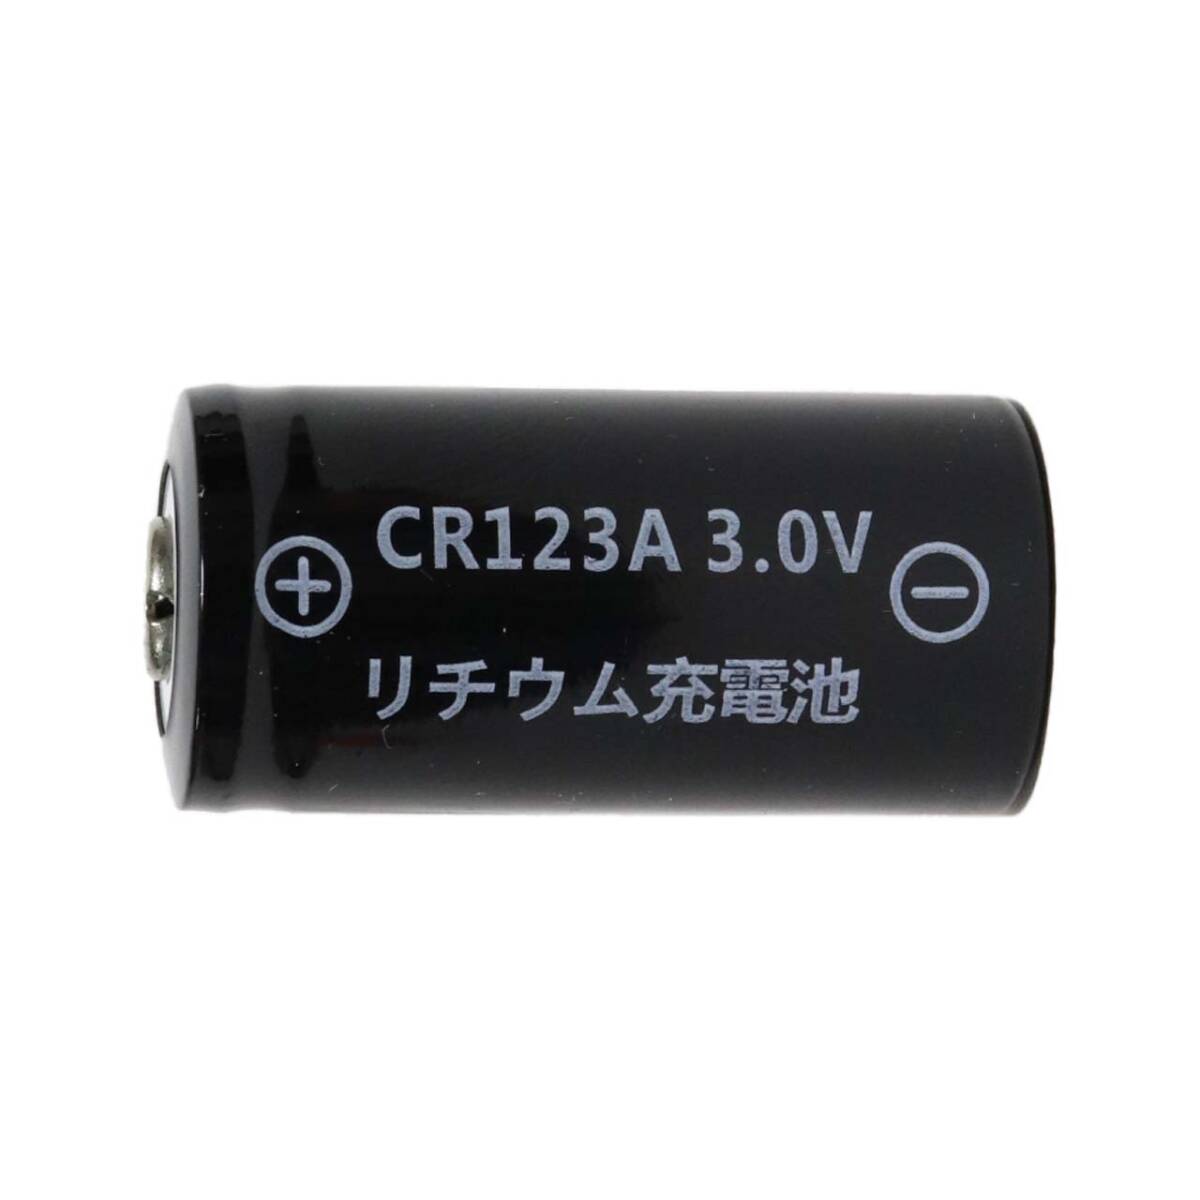 CR123A lithium ион перезаряжаемая батарея Smart блокировка ключ "умный" ключ замок switch bot переключатель boto камера аккумулятор заряжающийся CR123A 04